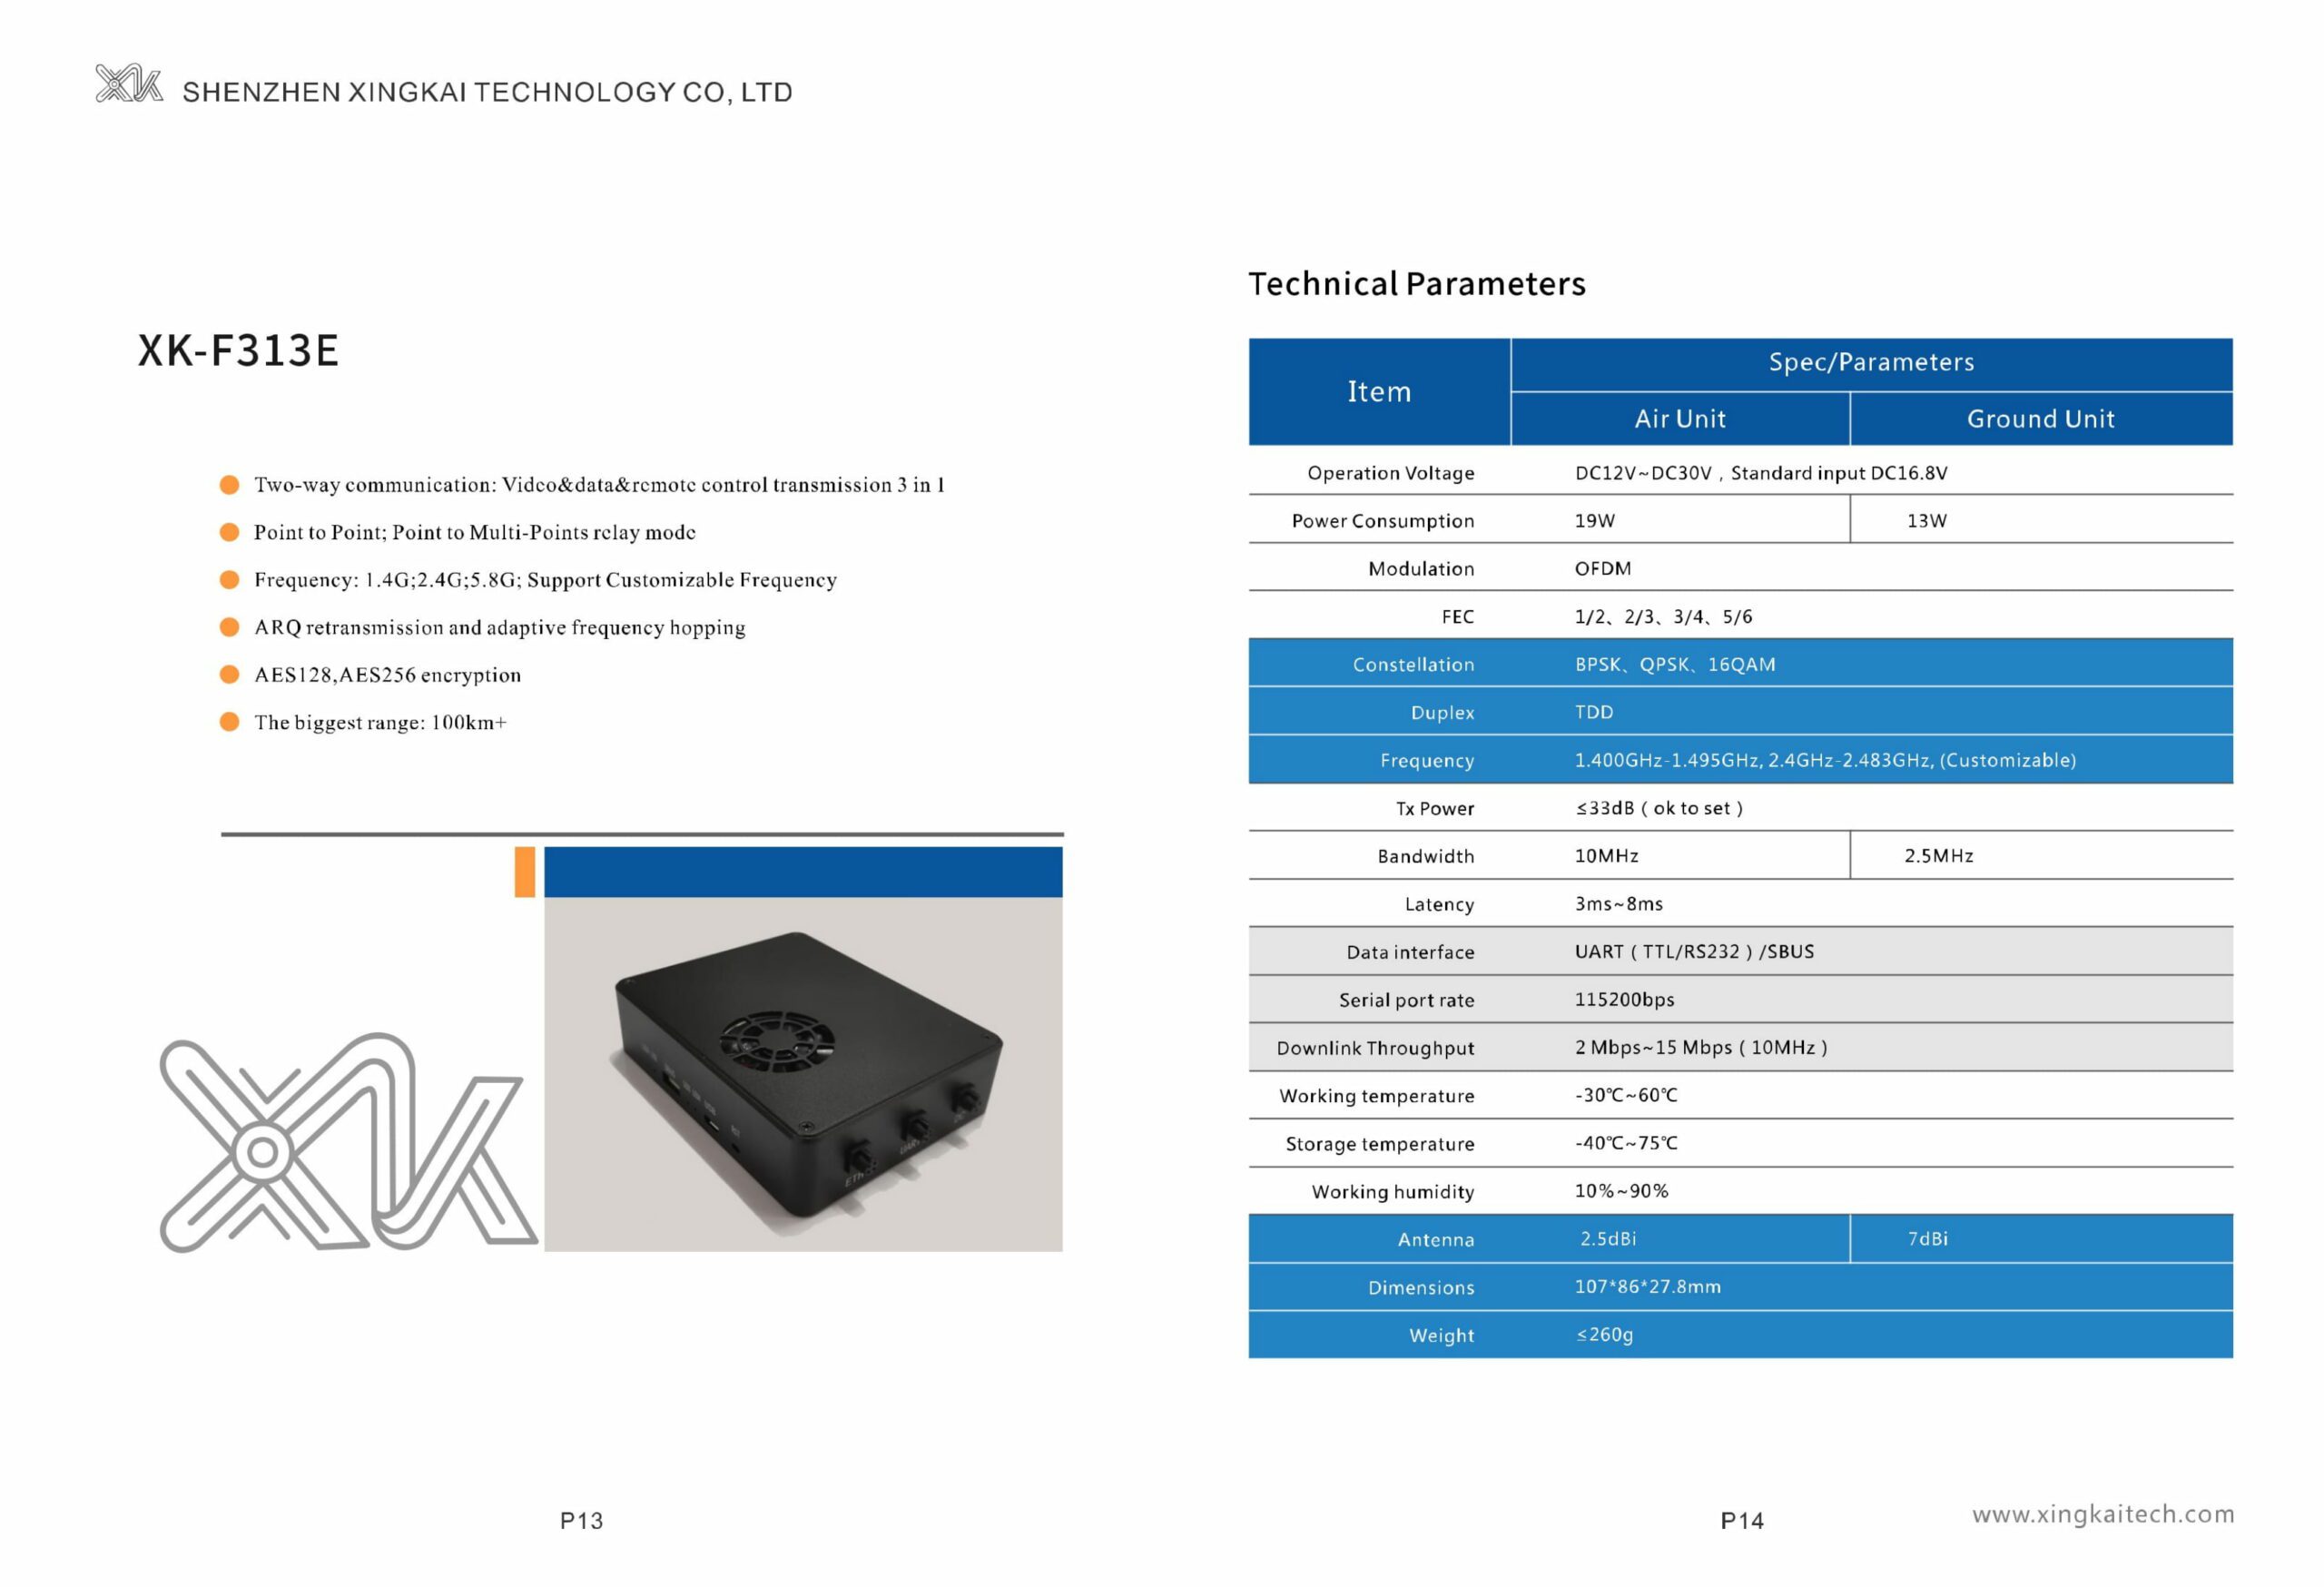 Catalogue Of Shenzhen Xingkai Technology Co. Ltd 08 Scaled